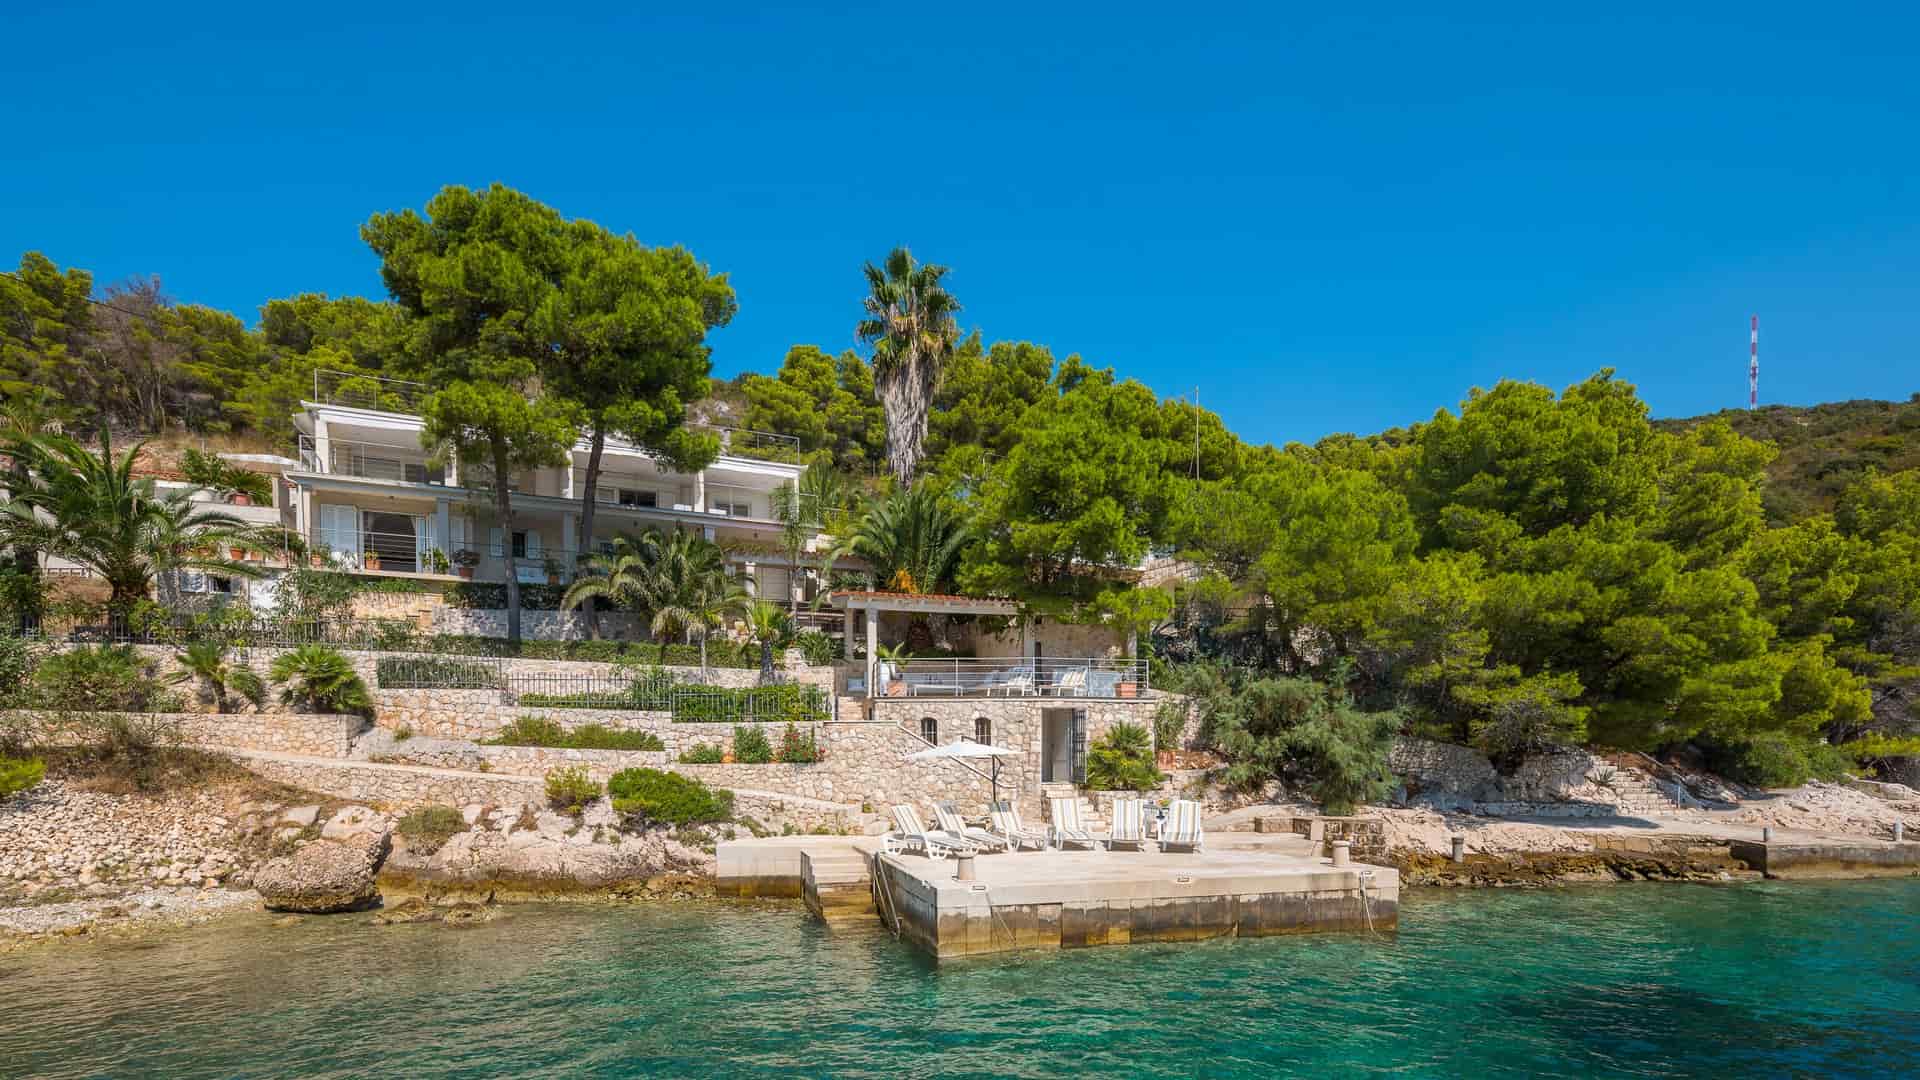 Luxury beach villa, with a stunning view